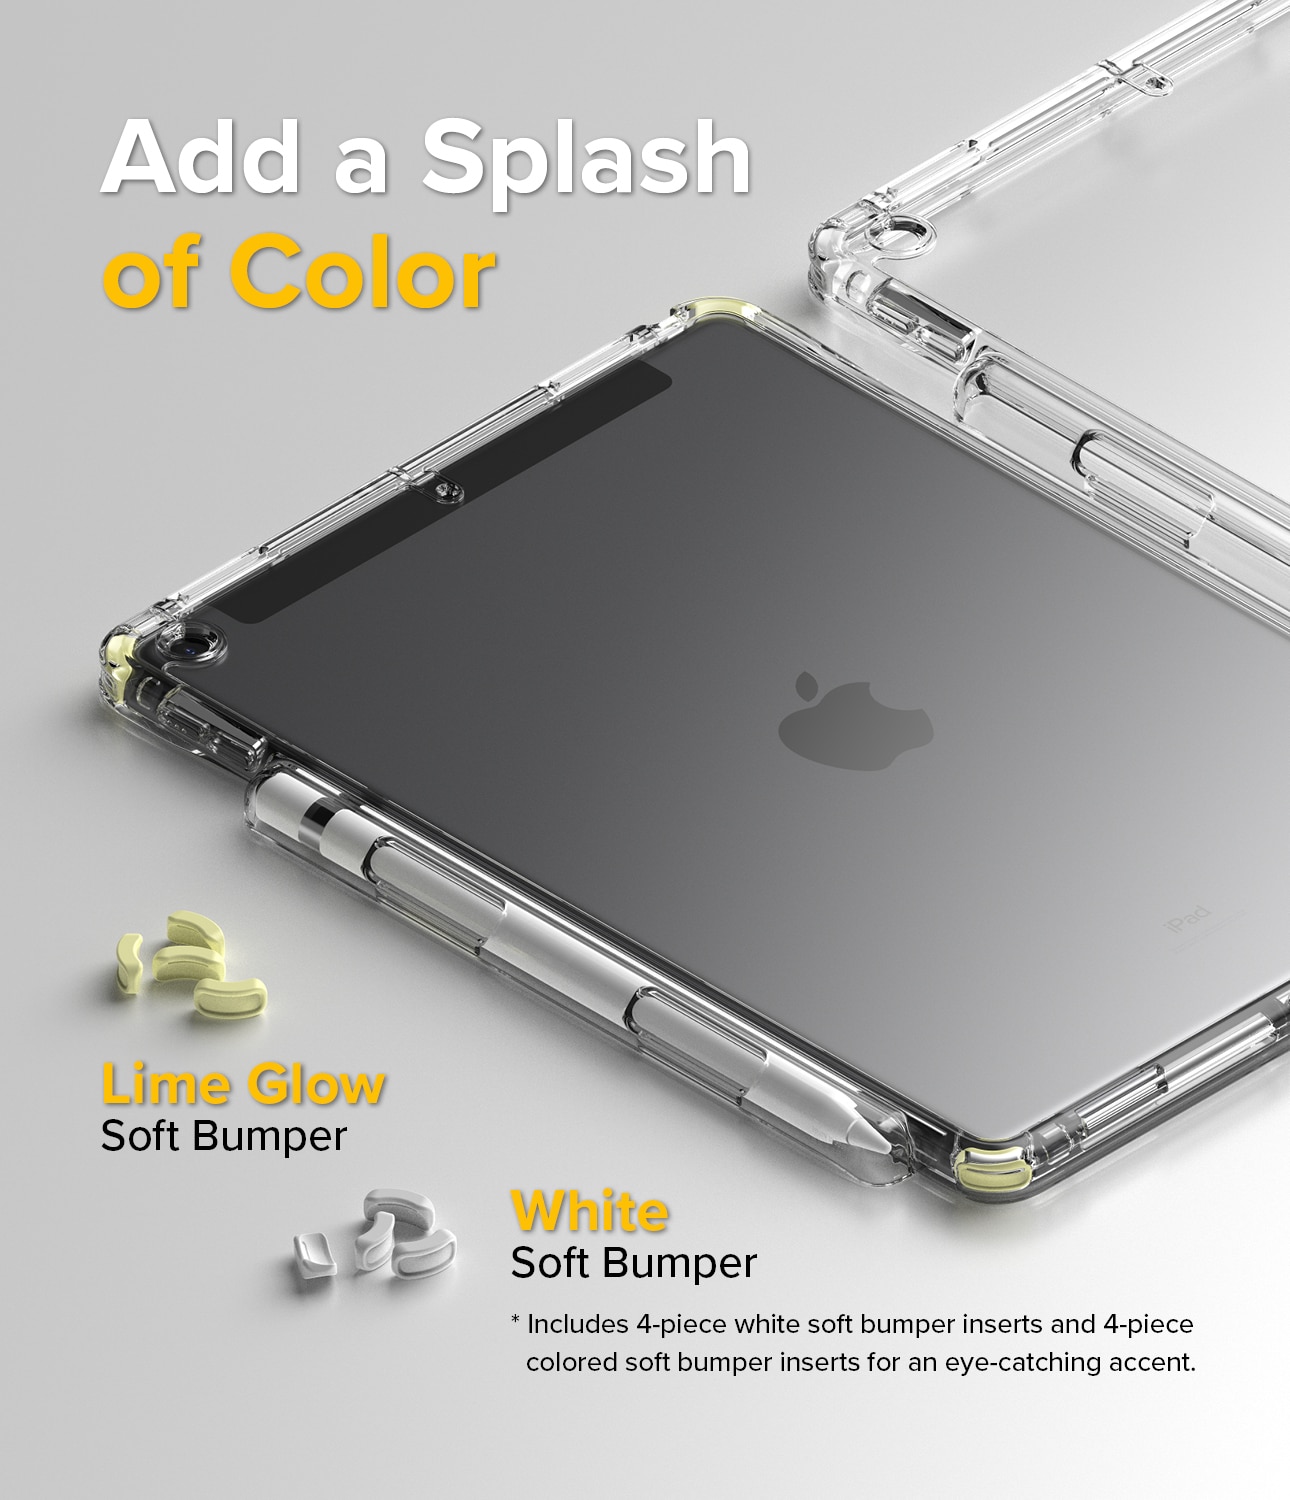 iPad 10.2 8th Gen (2020) Fusion Plus Case White/Lime Glow